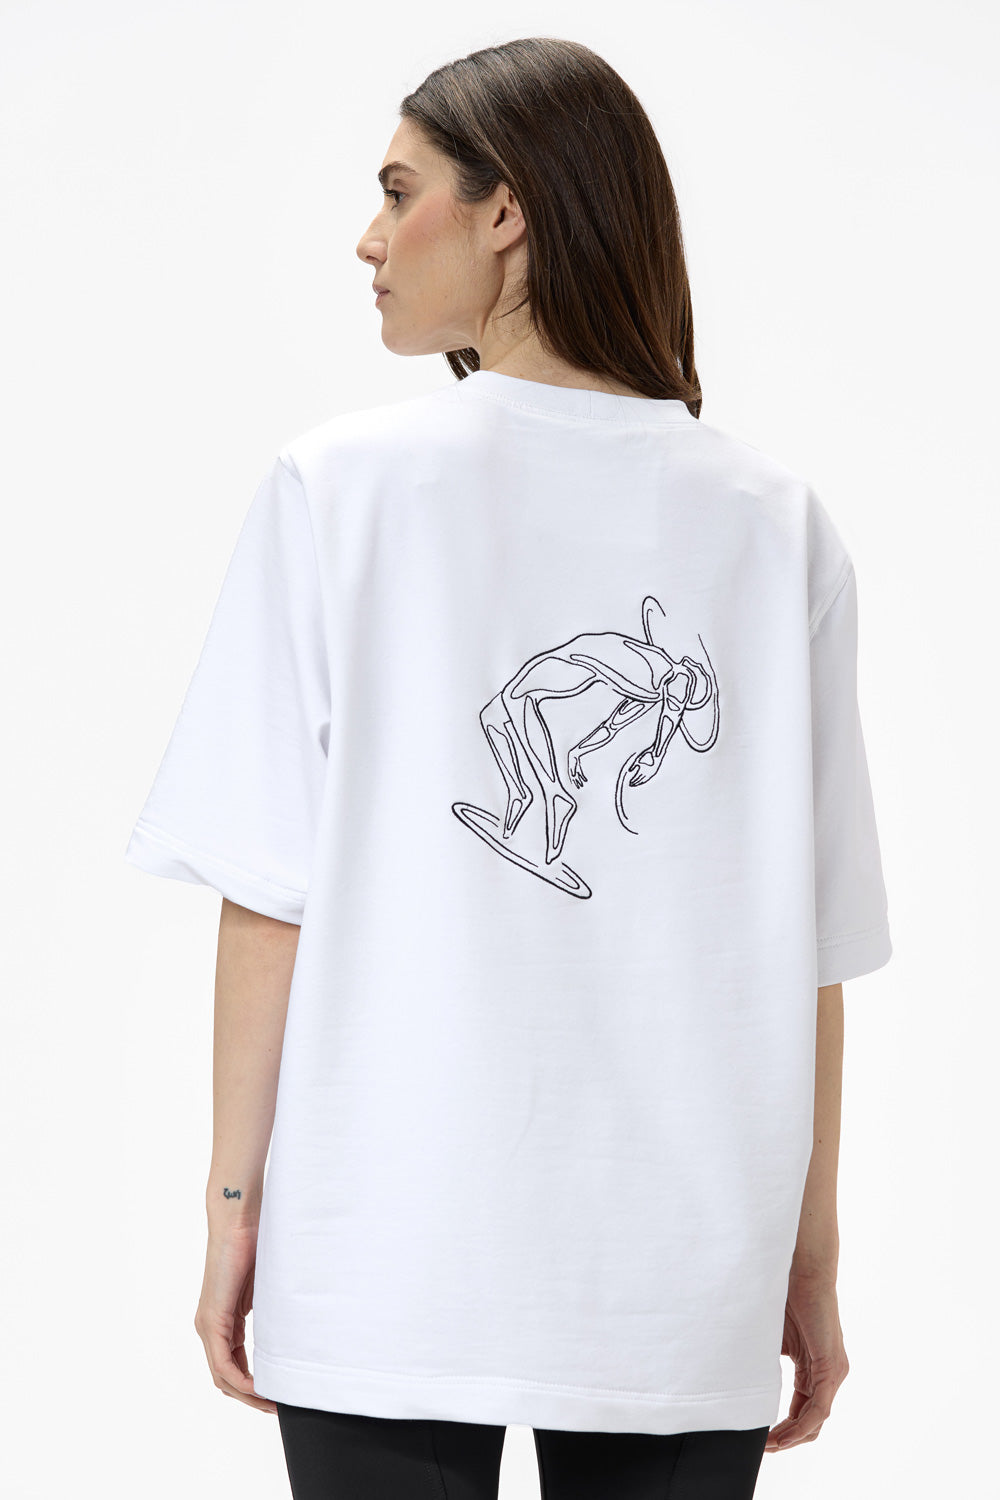 Aura embroidered W t-shirt